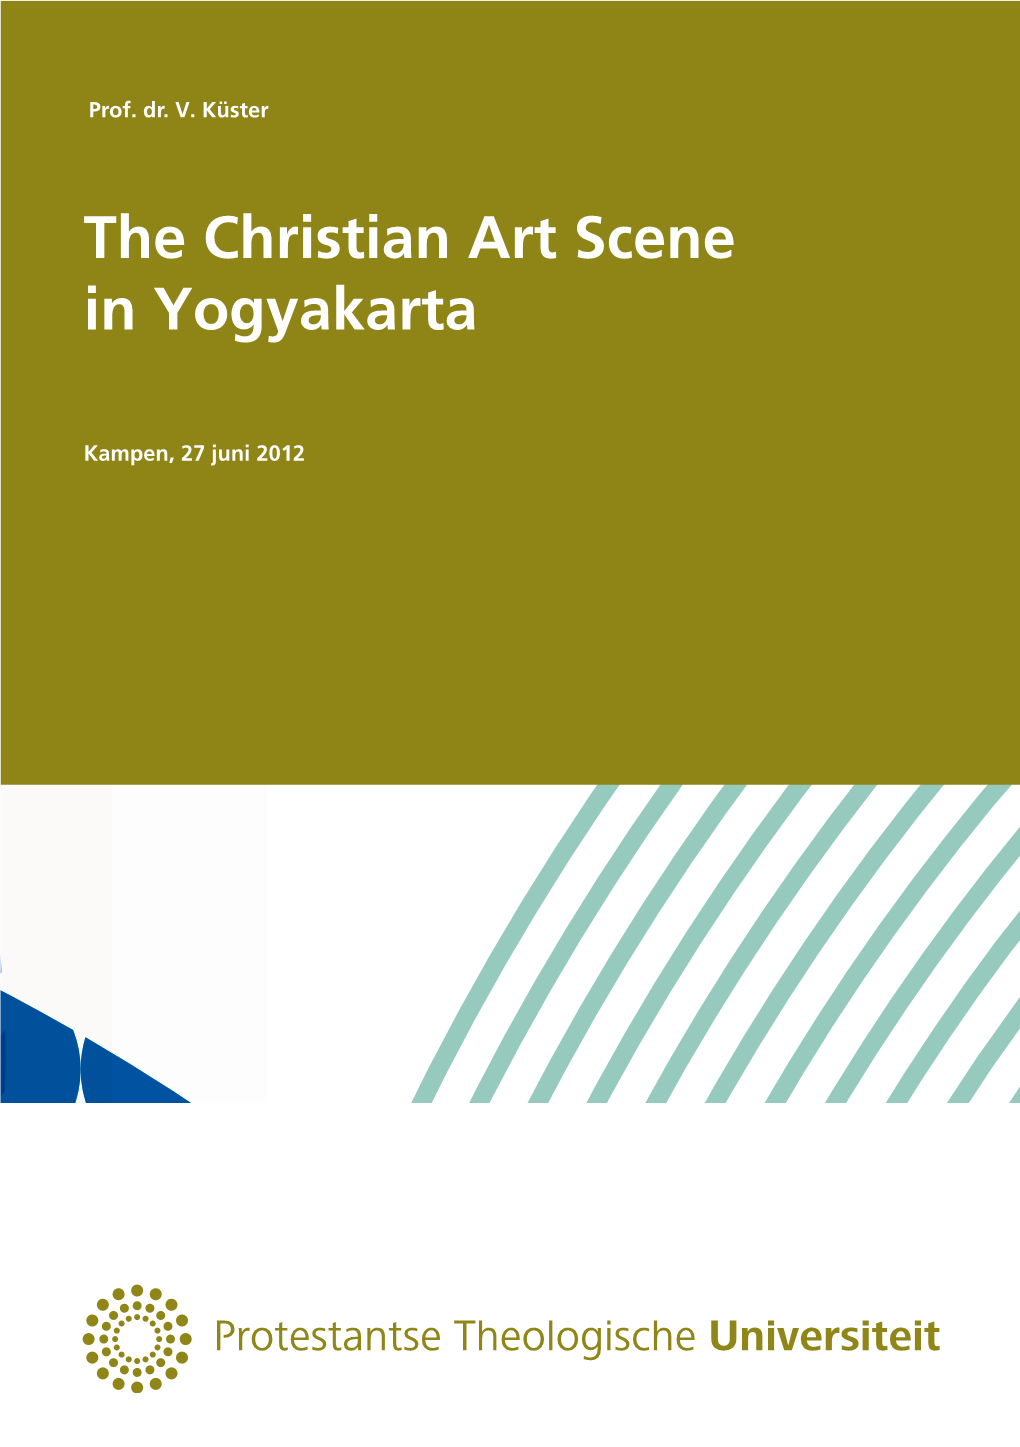 The Christian Art Scene in Yogyakarta